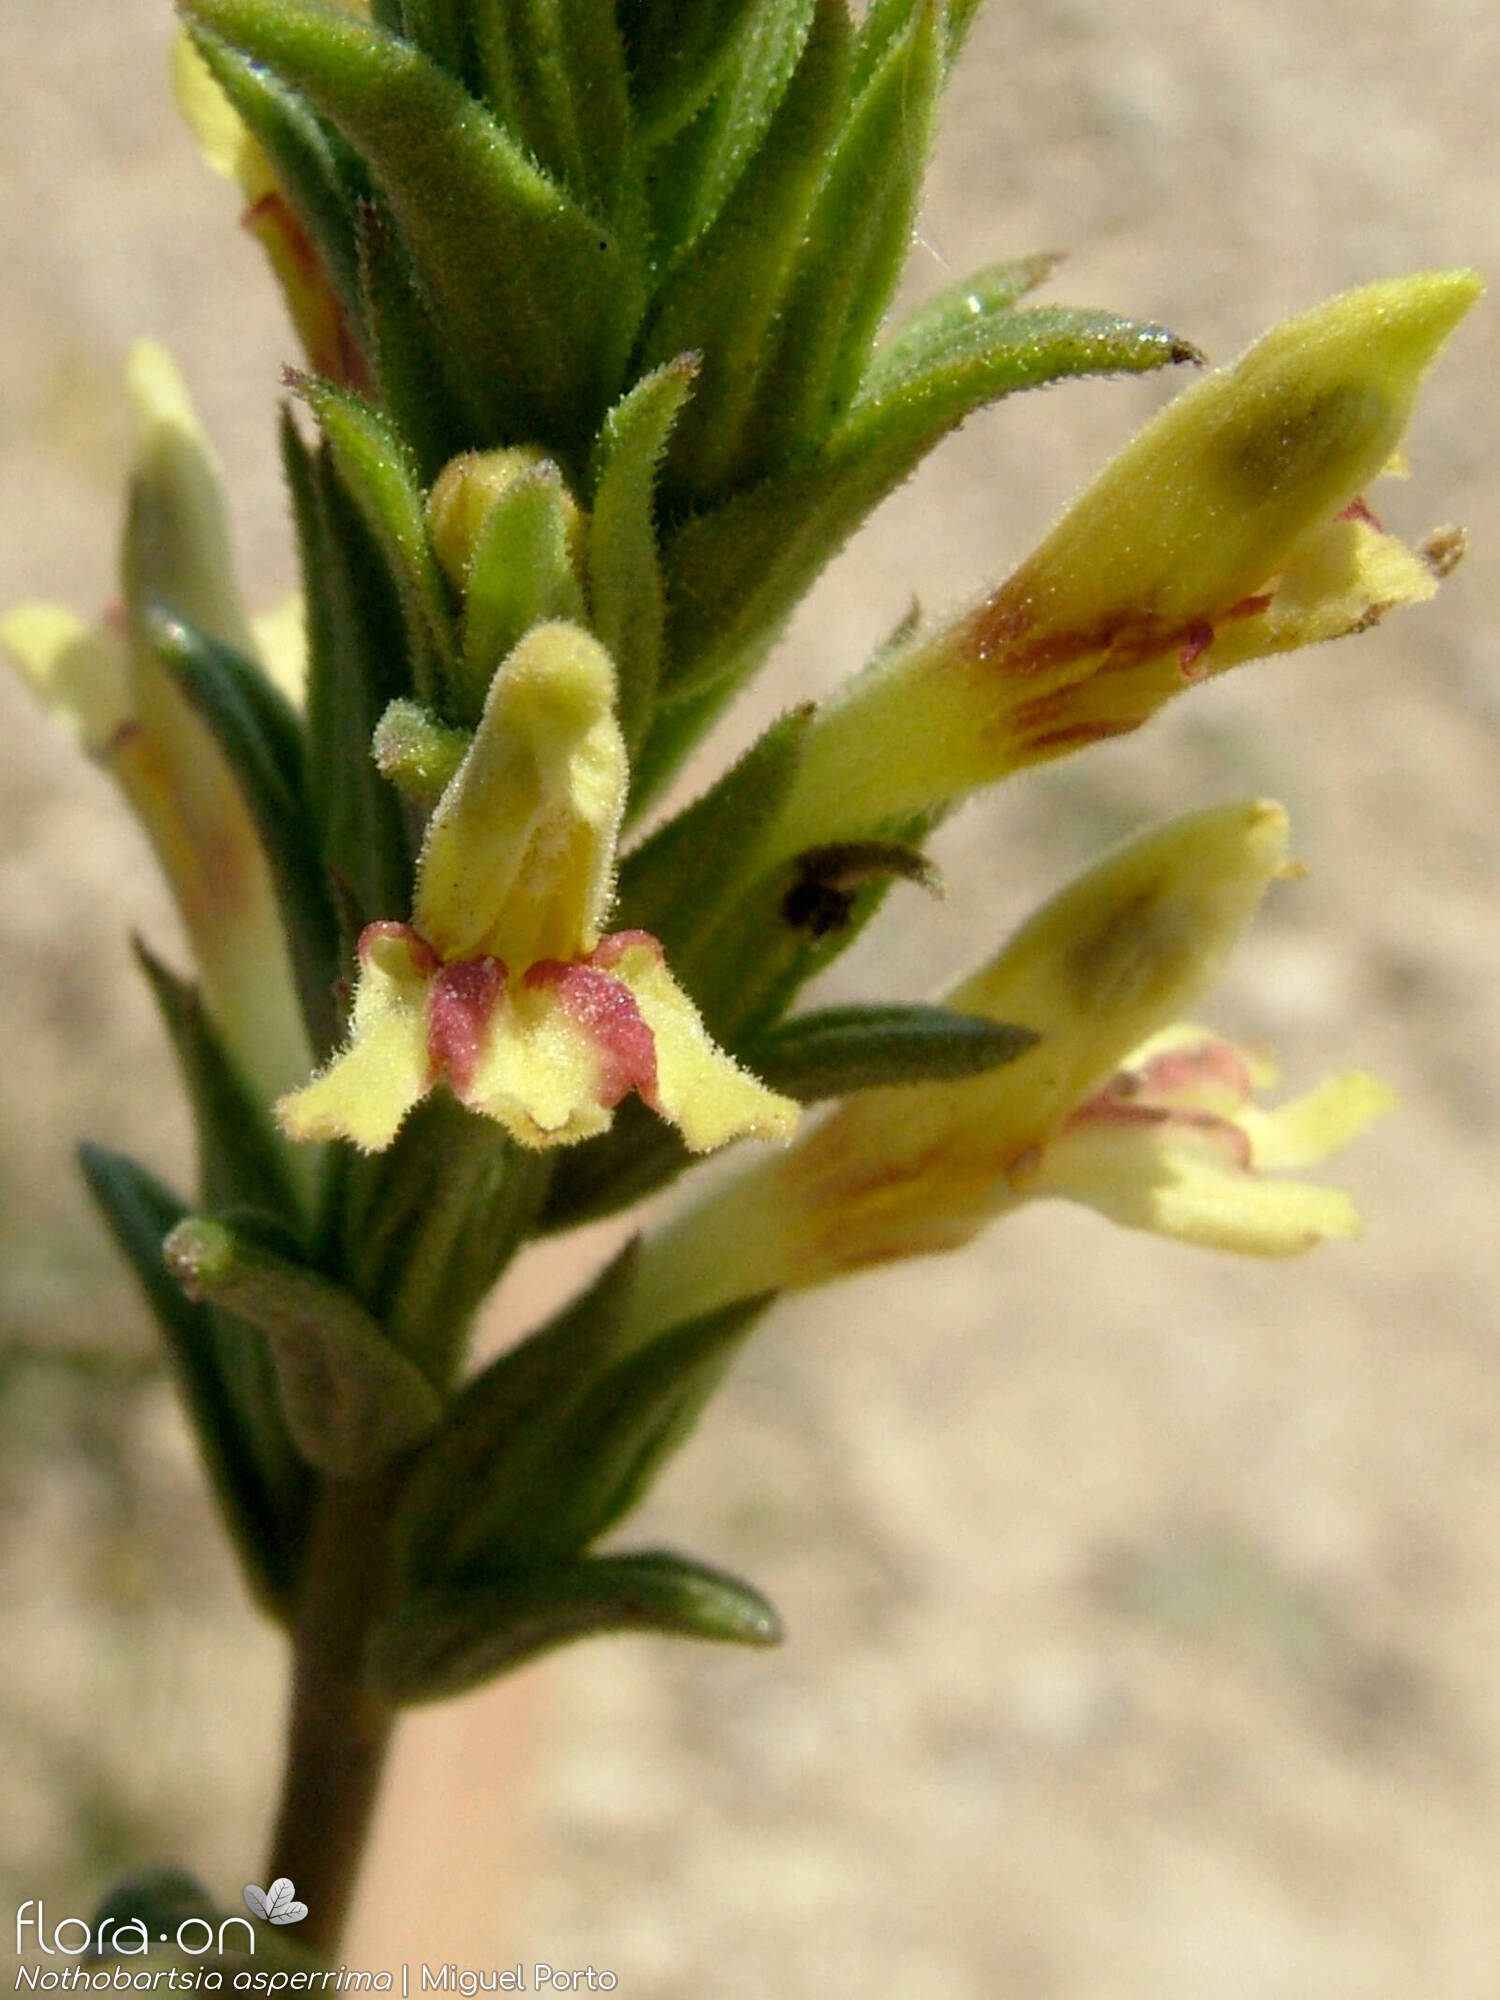 Nothobartsia asperrima - Flor (close-up) | Miguel Porto; CC BY-NC 4.0